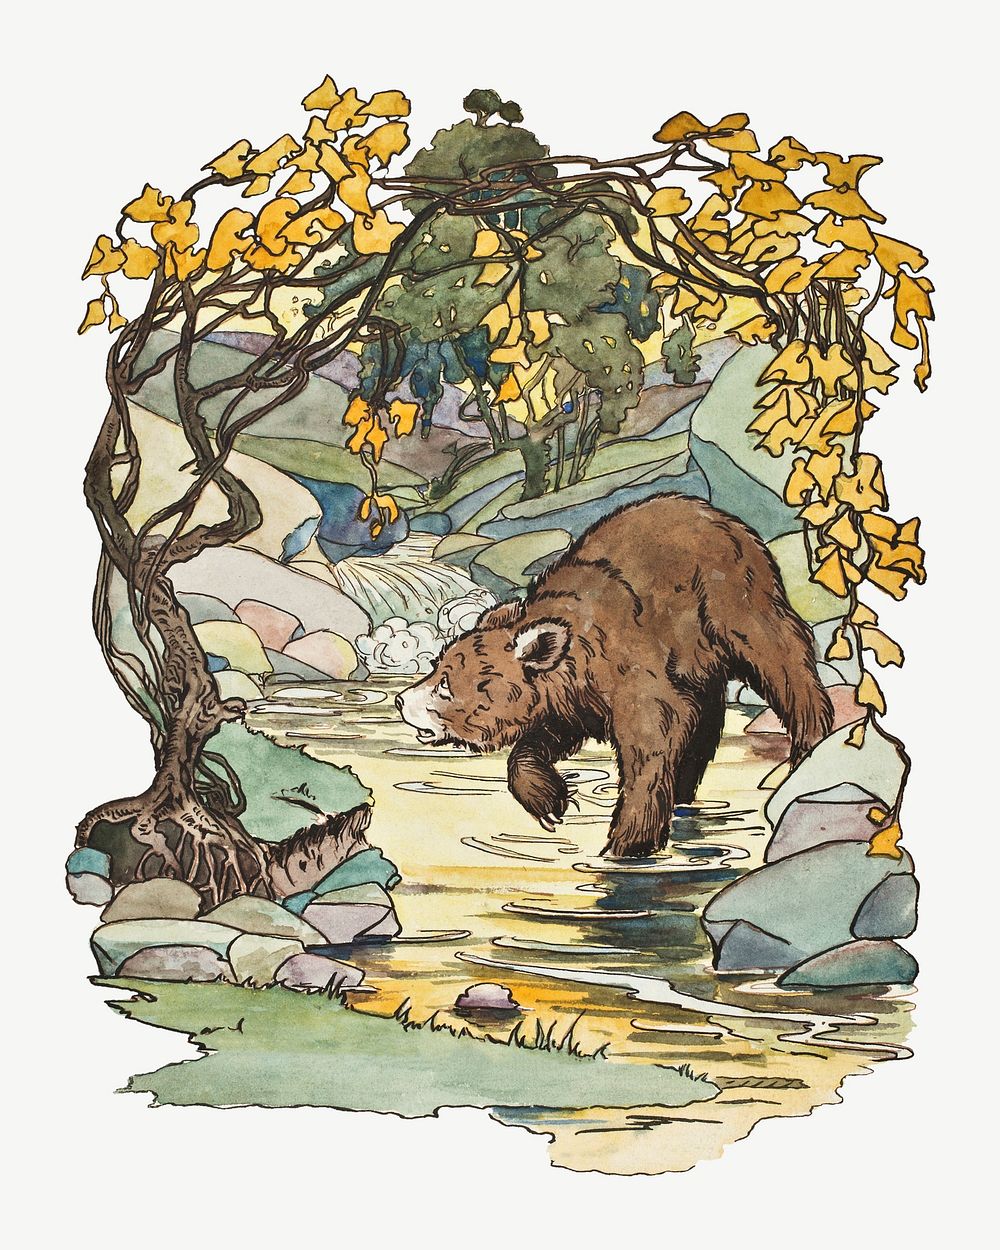 Vintage bear illustration psd. Remixed by rawpixel.